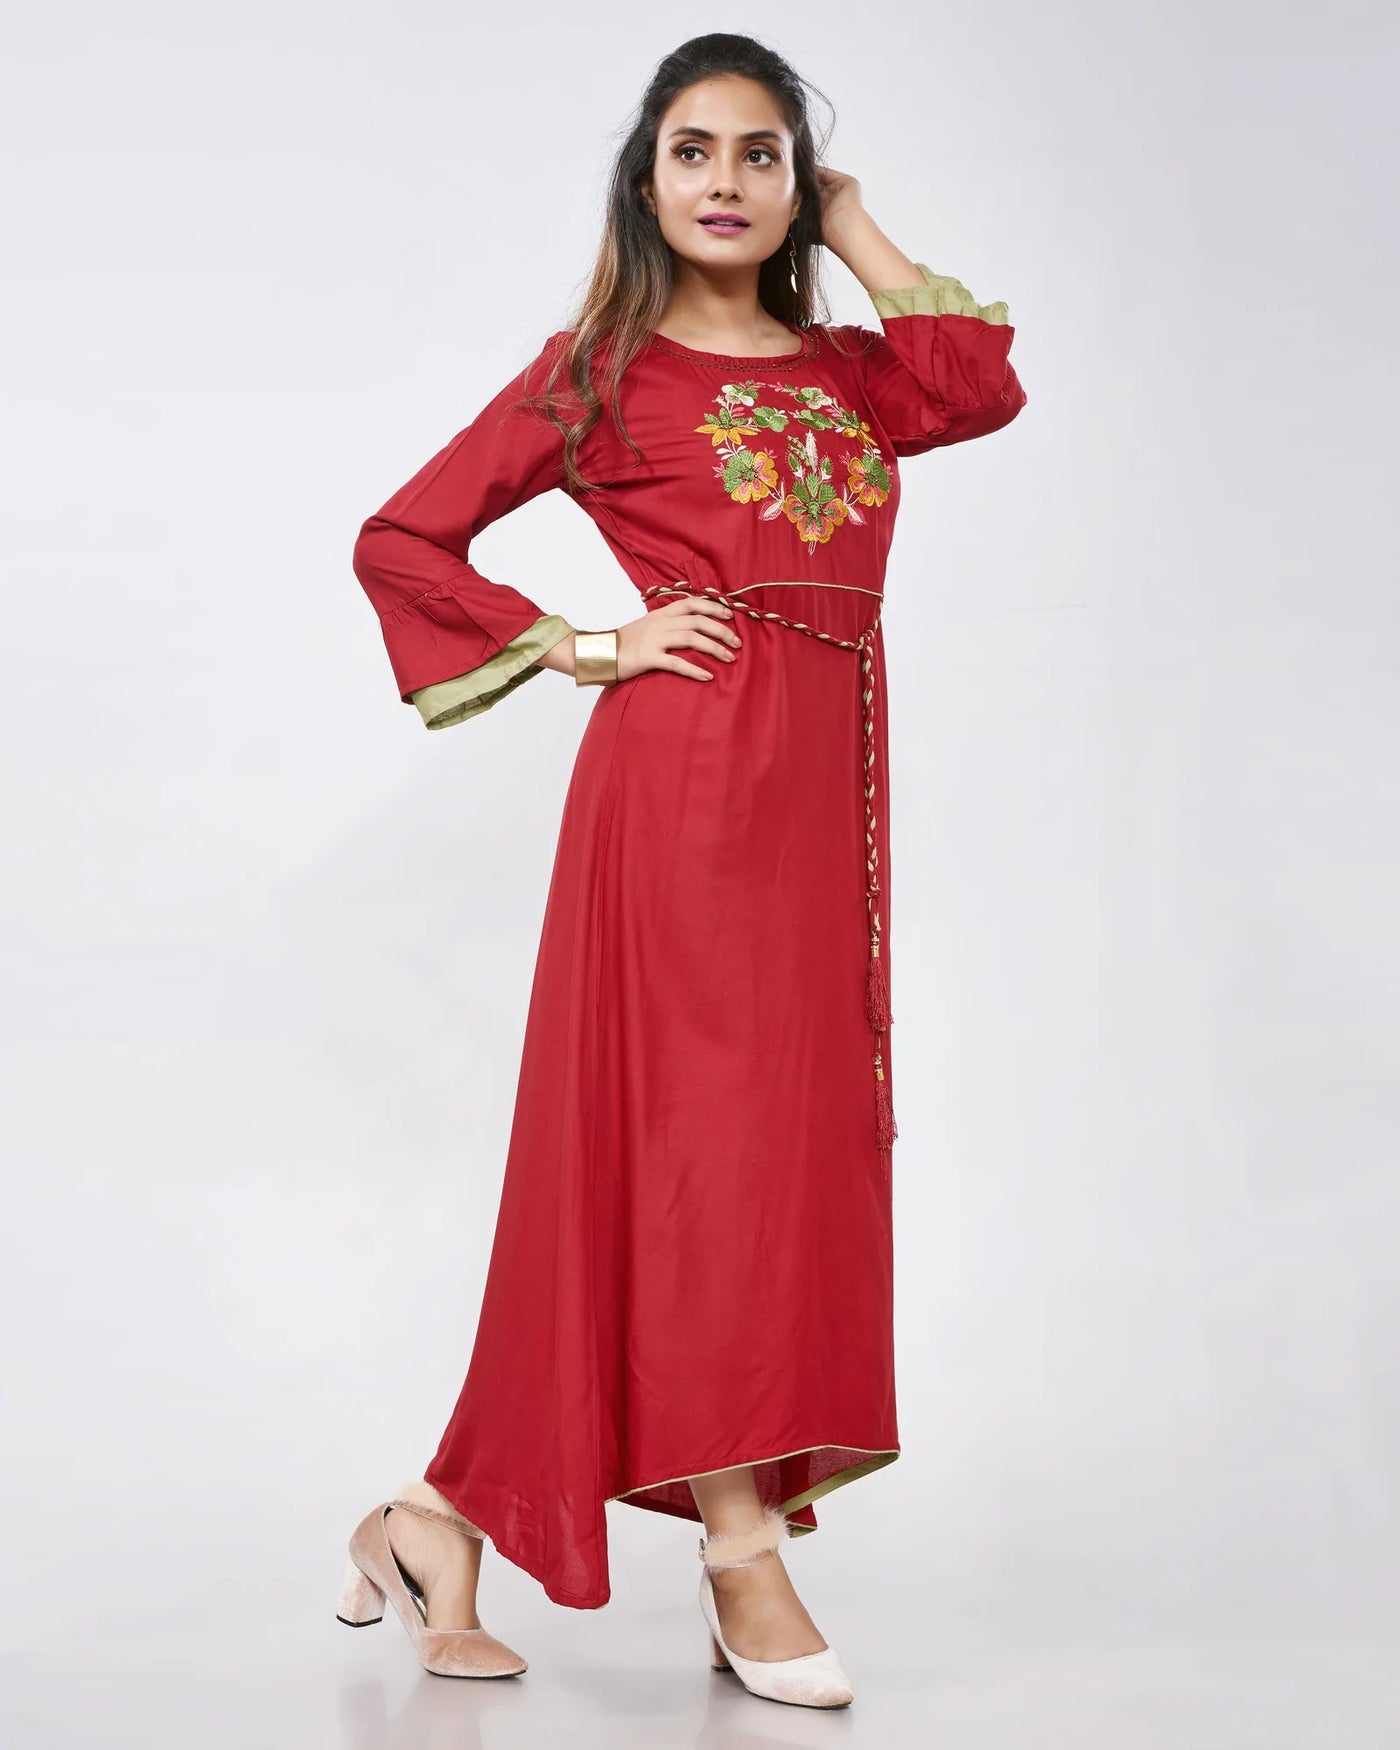 Fidaindia Maroon Rayon Asymetric Long Dress